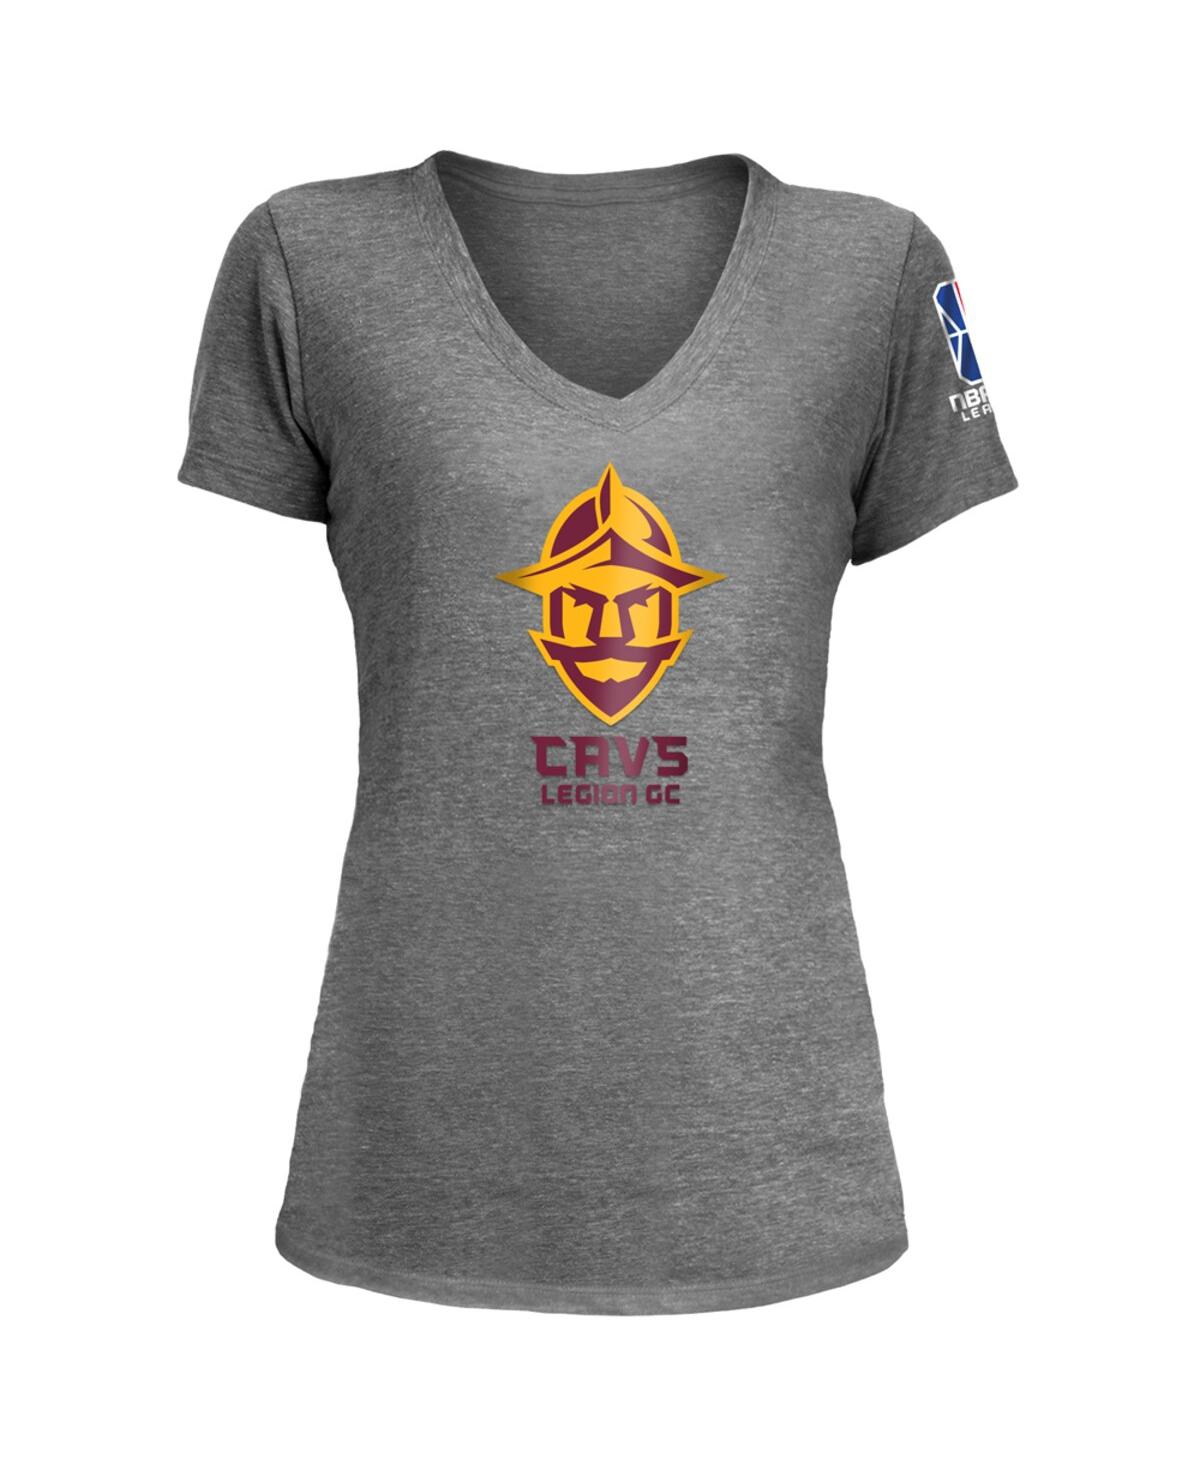 New Era Women's  Heather Gray Cavs Legion Gc Nba 2k League Logo Wordmark Tri-blend V-neck T-shirt